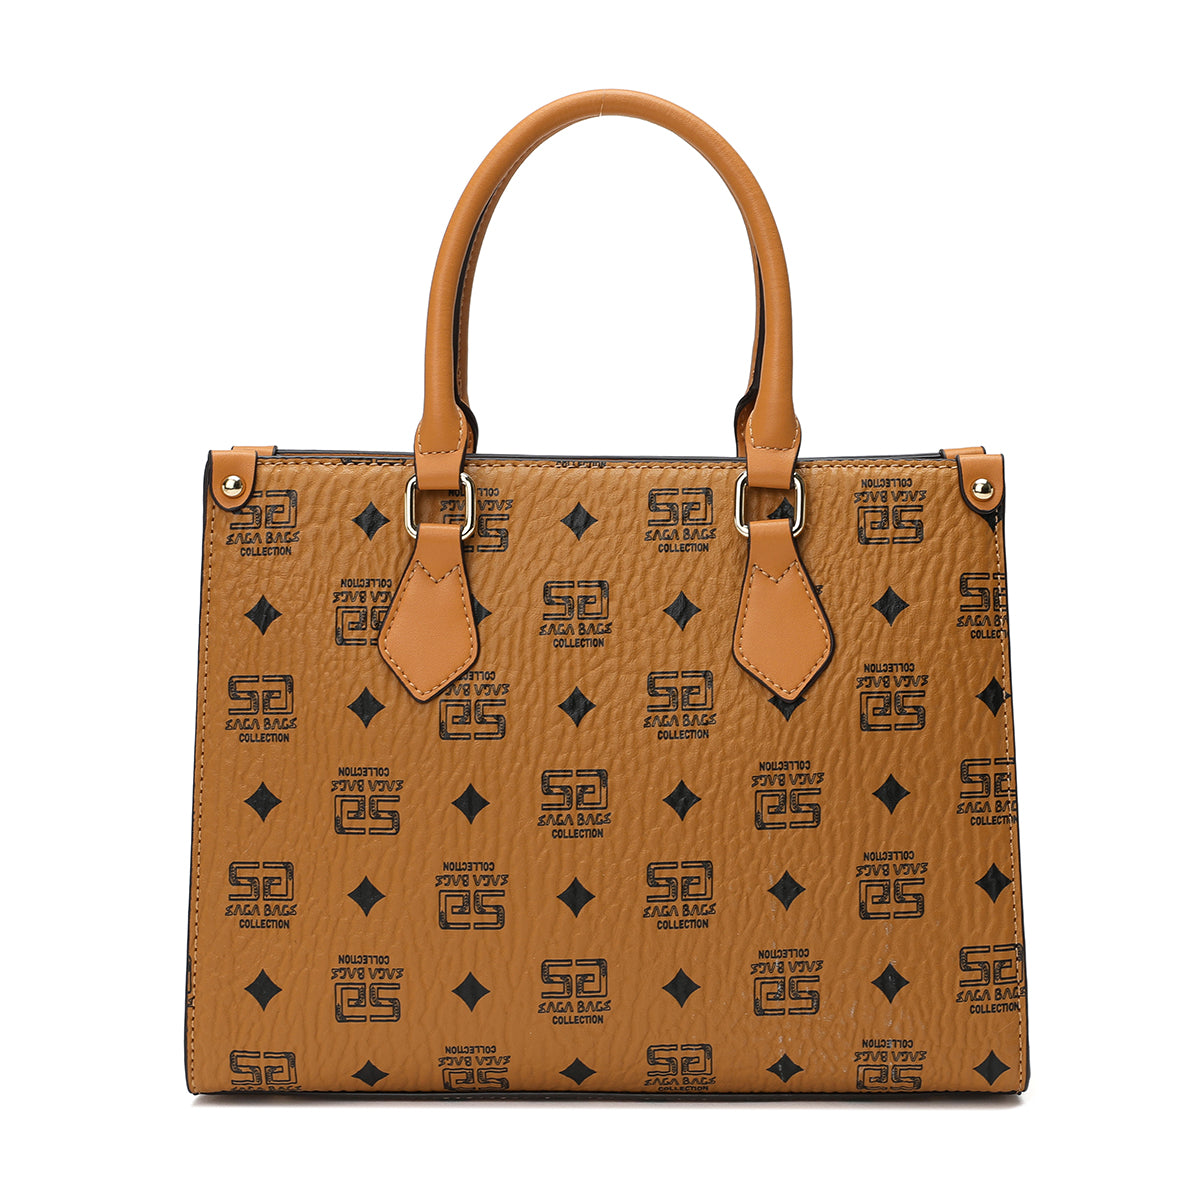 Luxurious leather bag, spacious and elegant design, width 28.5 cm